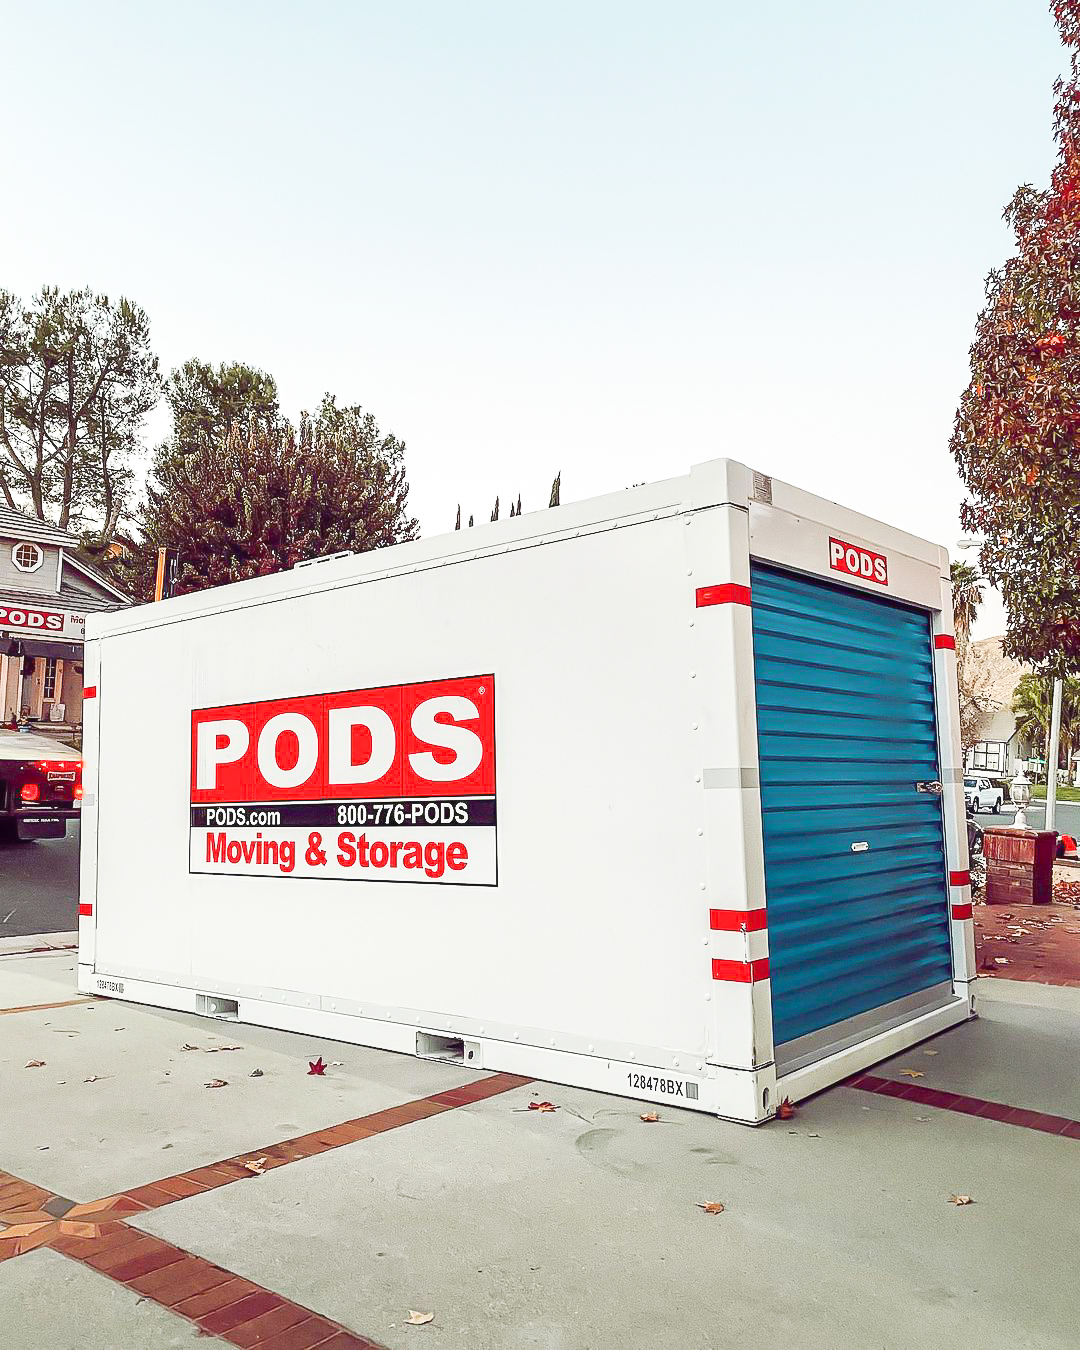 PODS Moving & Storage (@PODS) / X